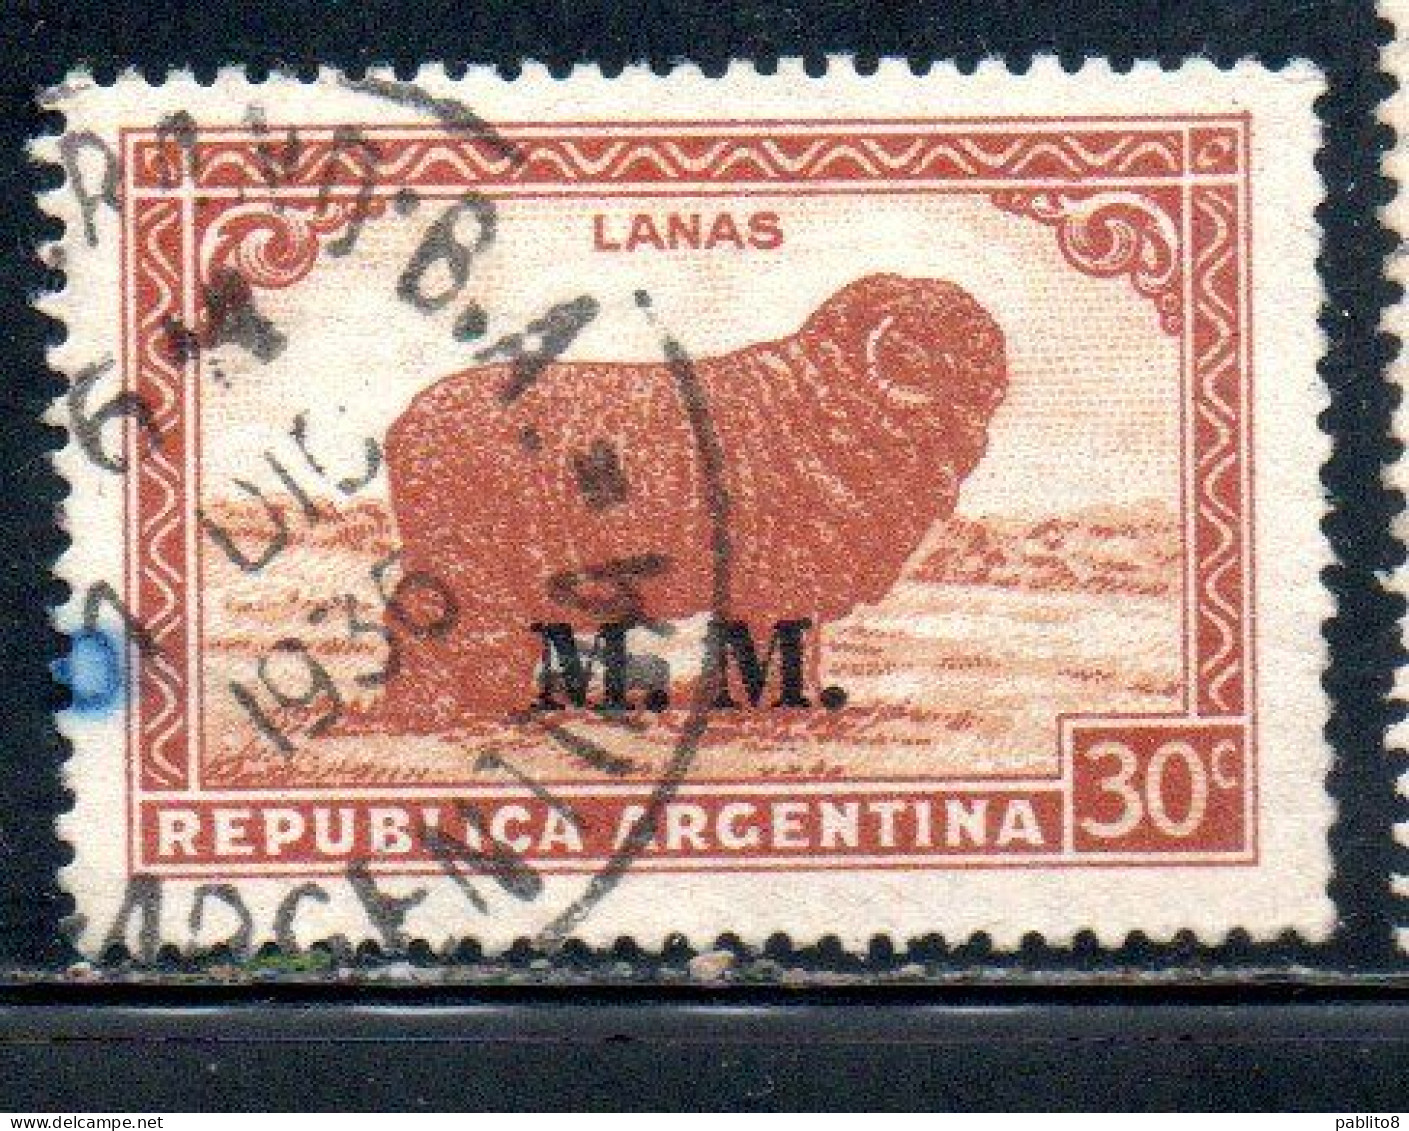 ARGENTINA 1935 1937 OFFICIAL DEPARTMENT STAMP OVERPRINTED M.M. MINISTRY OF MARINE MM 30c USED USADO - Dienstzegels